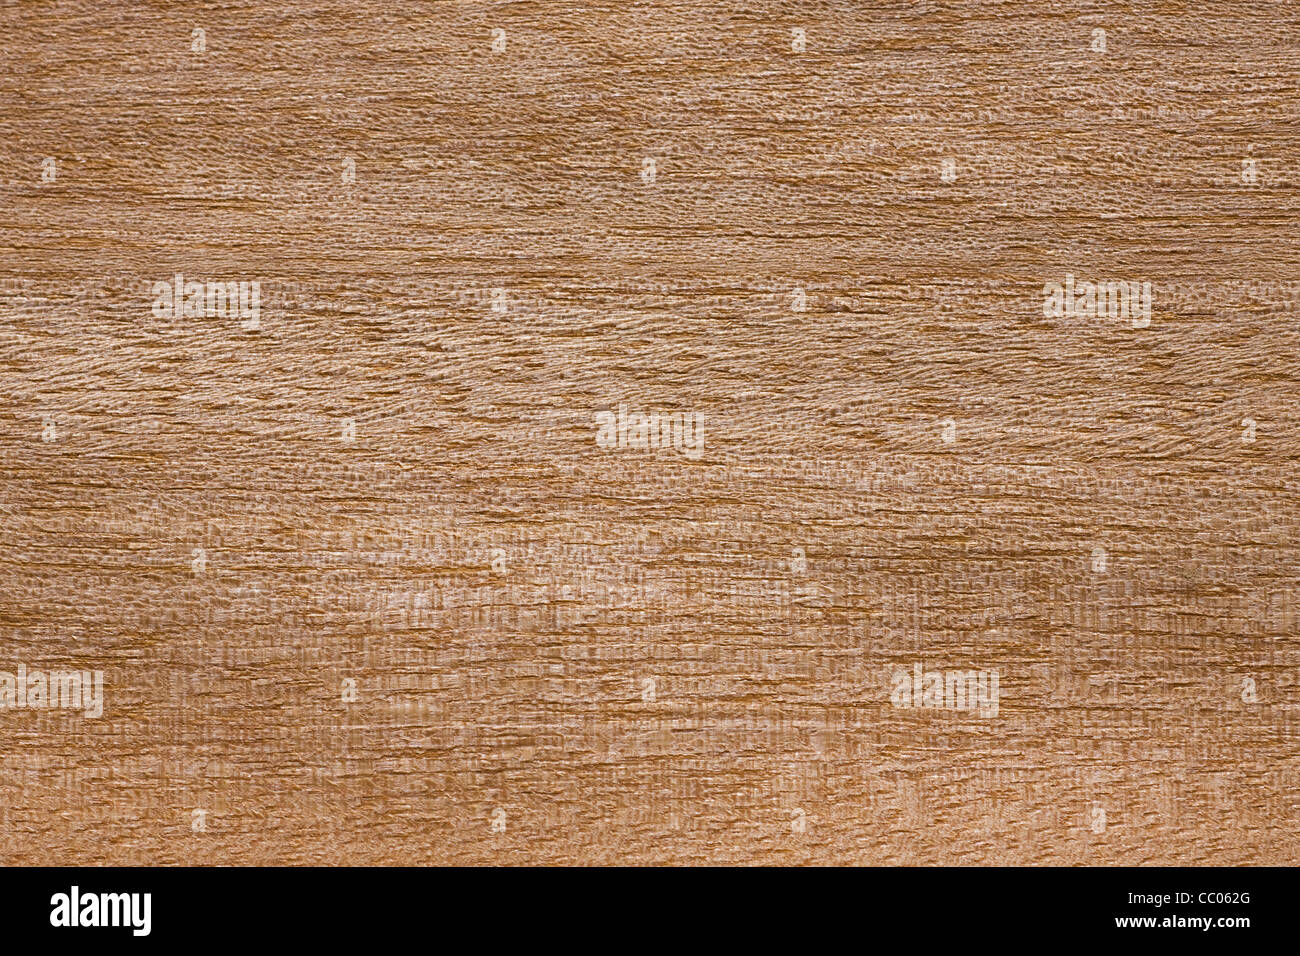 Wood grain of Anegre / Aningre / Asamfona / Kali / tonewood (Aningeria altissima), Africa Stock Photo